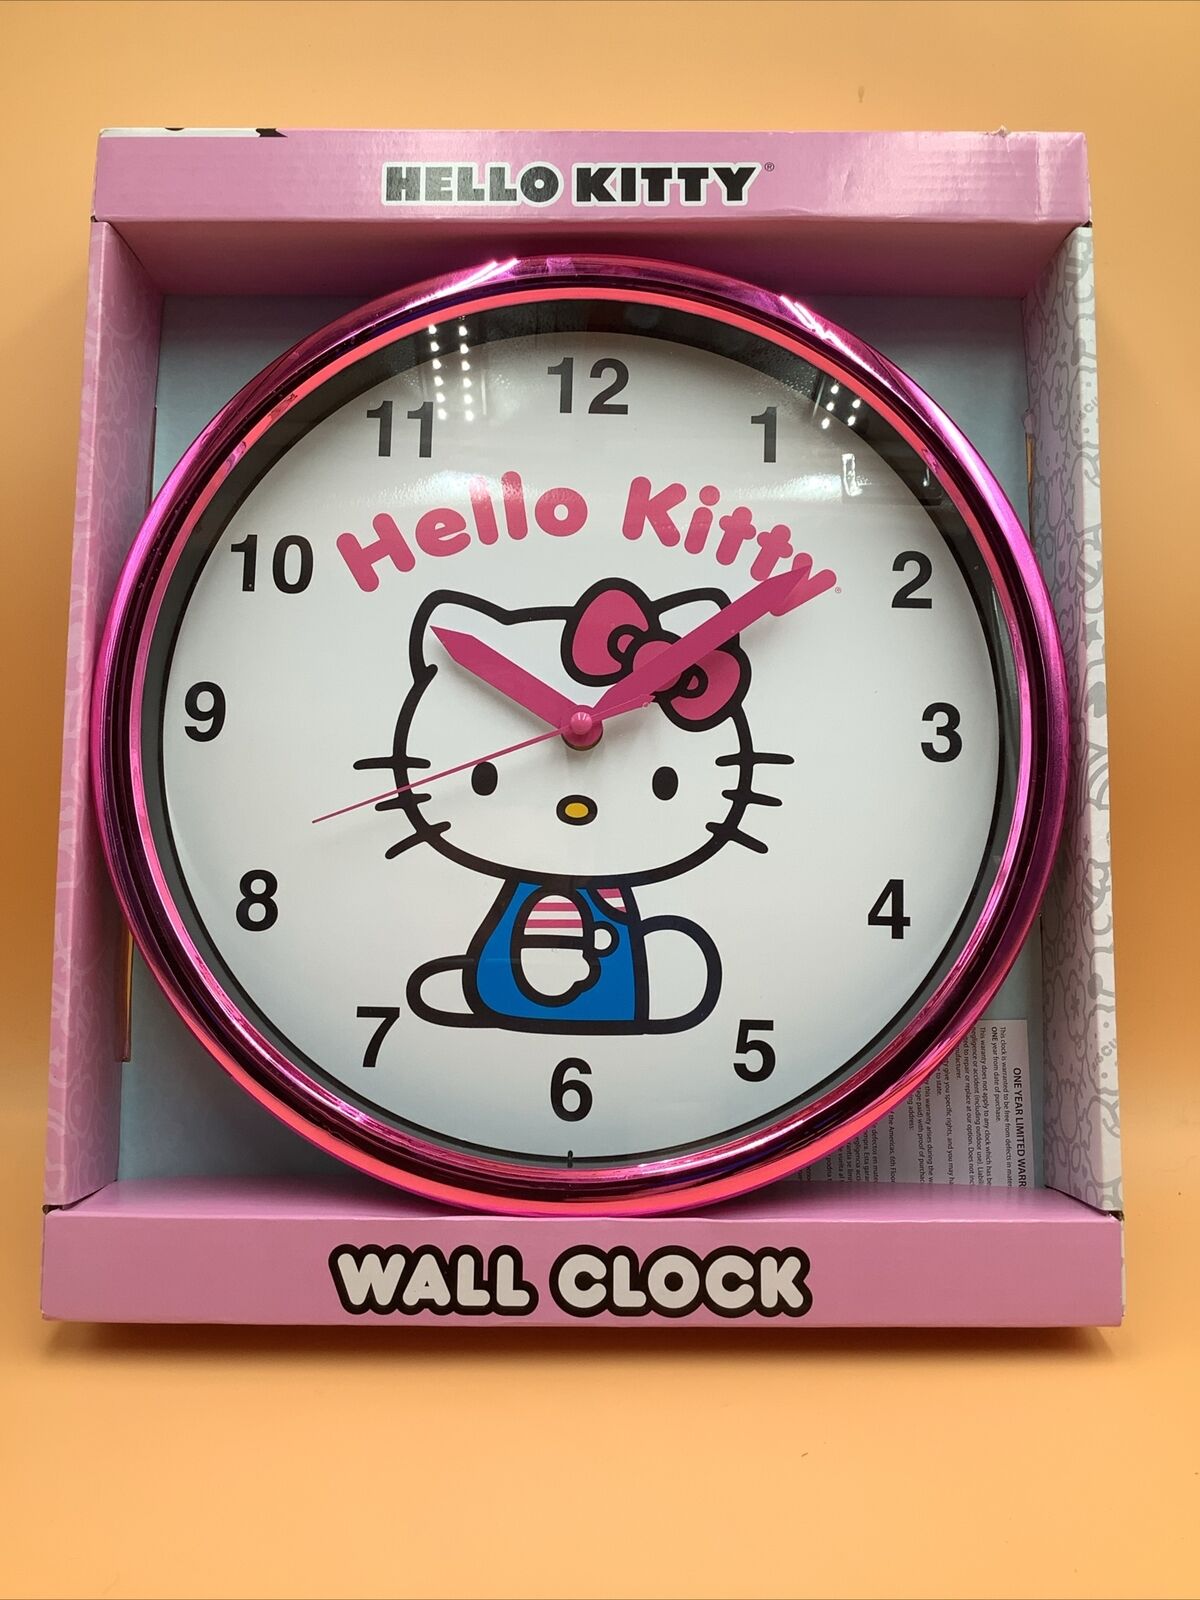 NEW Sanrio Hello Kitty Wall Clock Large Pink Analog Display Approx 12\